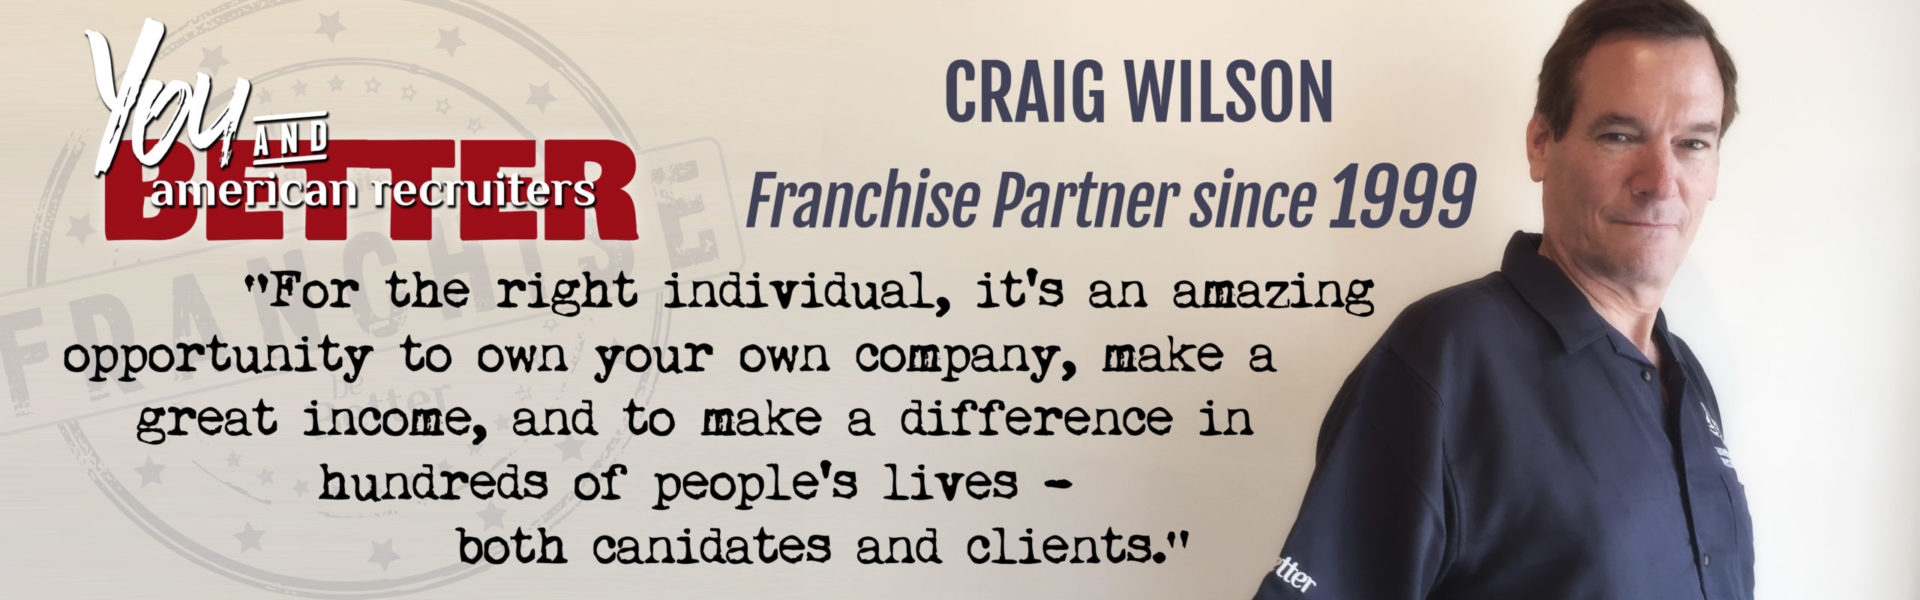 franchise-owner-testimonial-craig-wilson